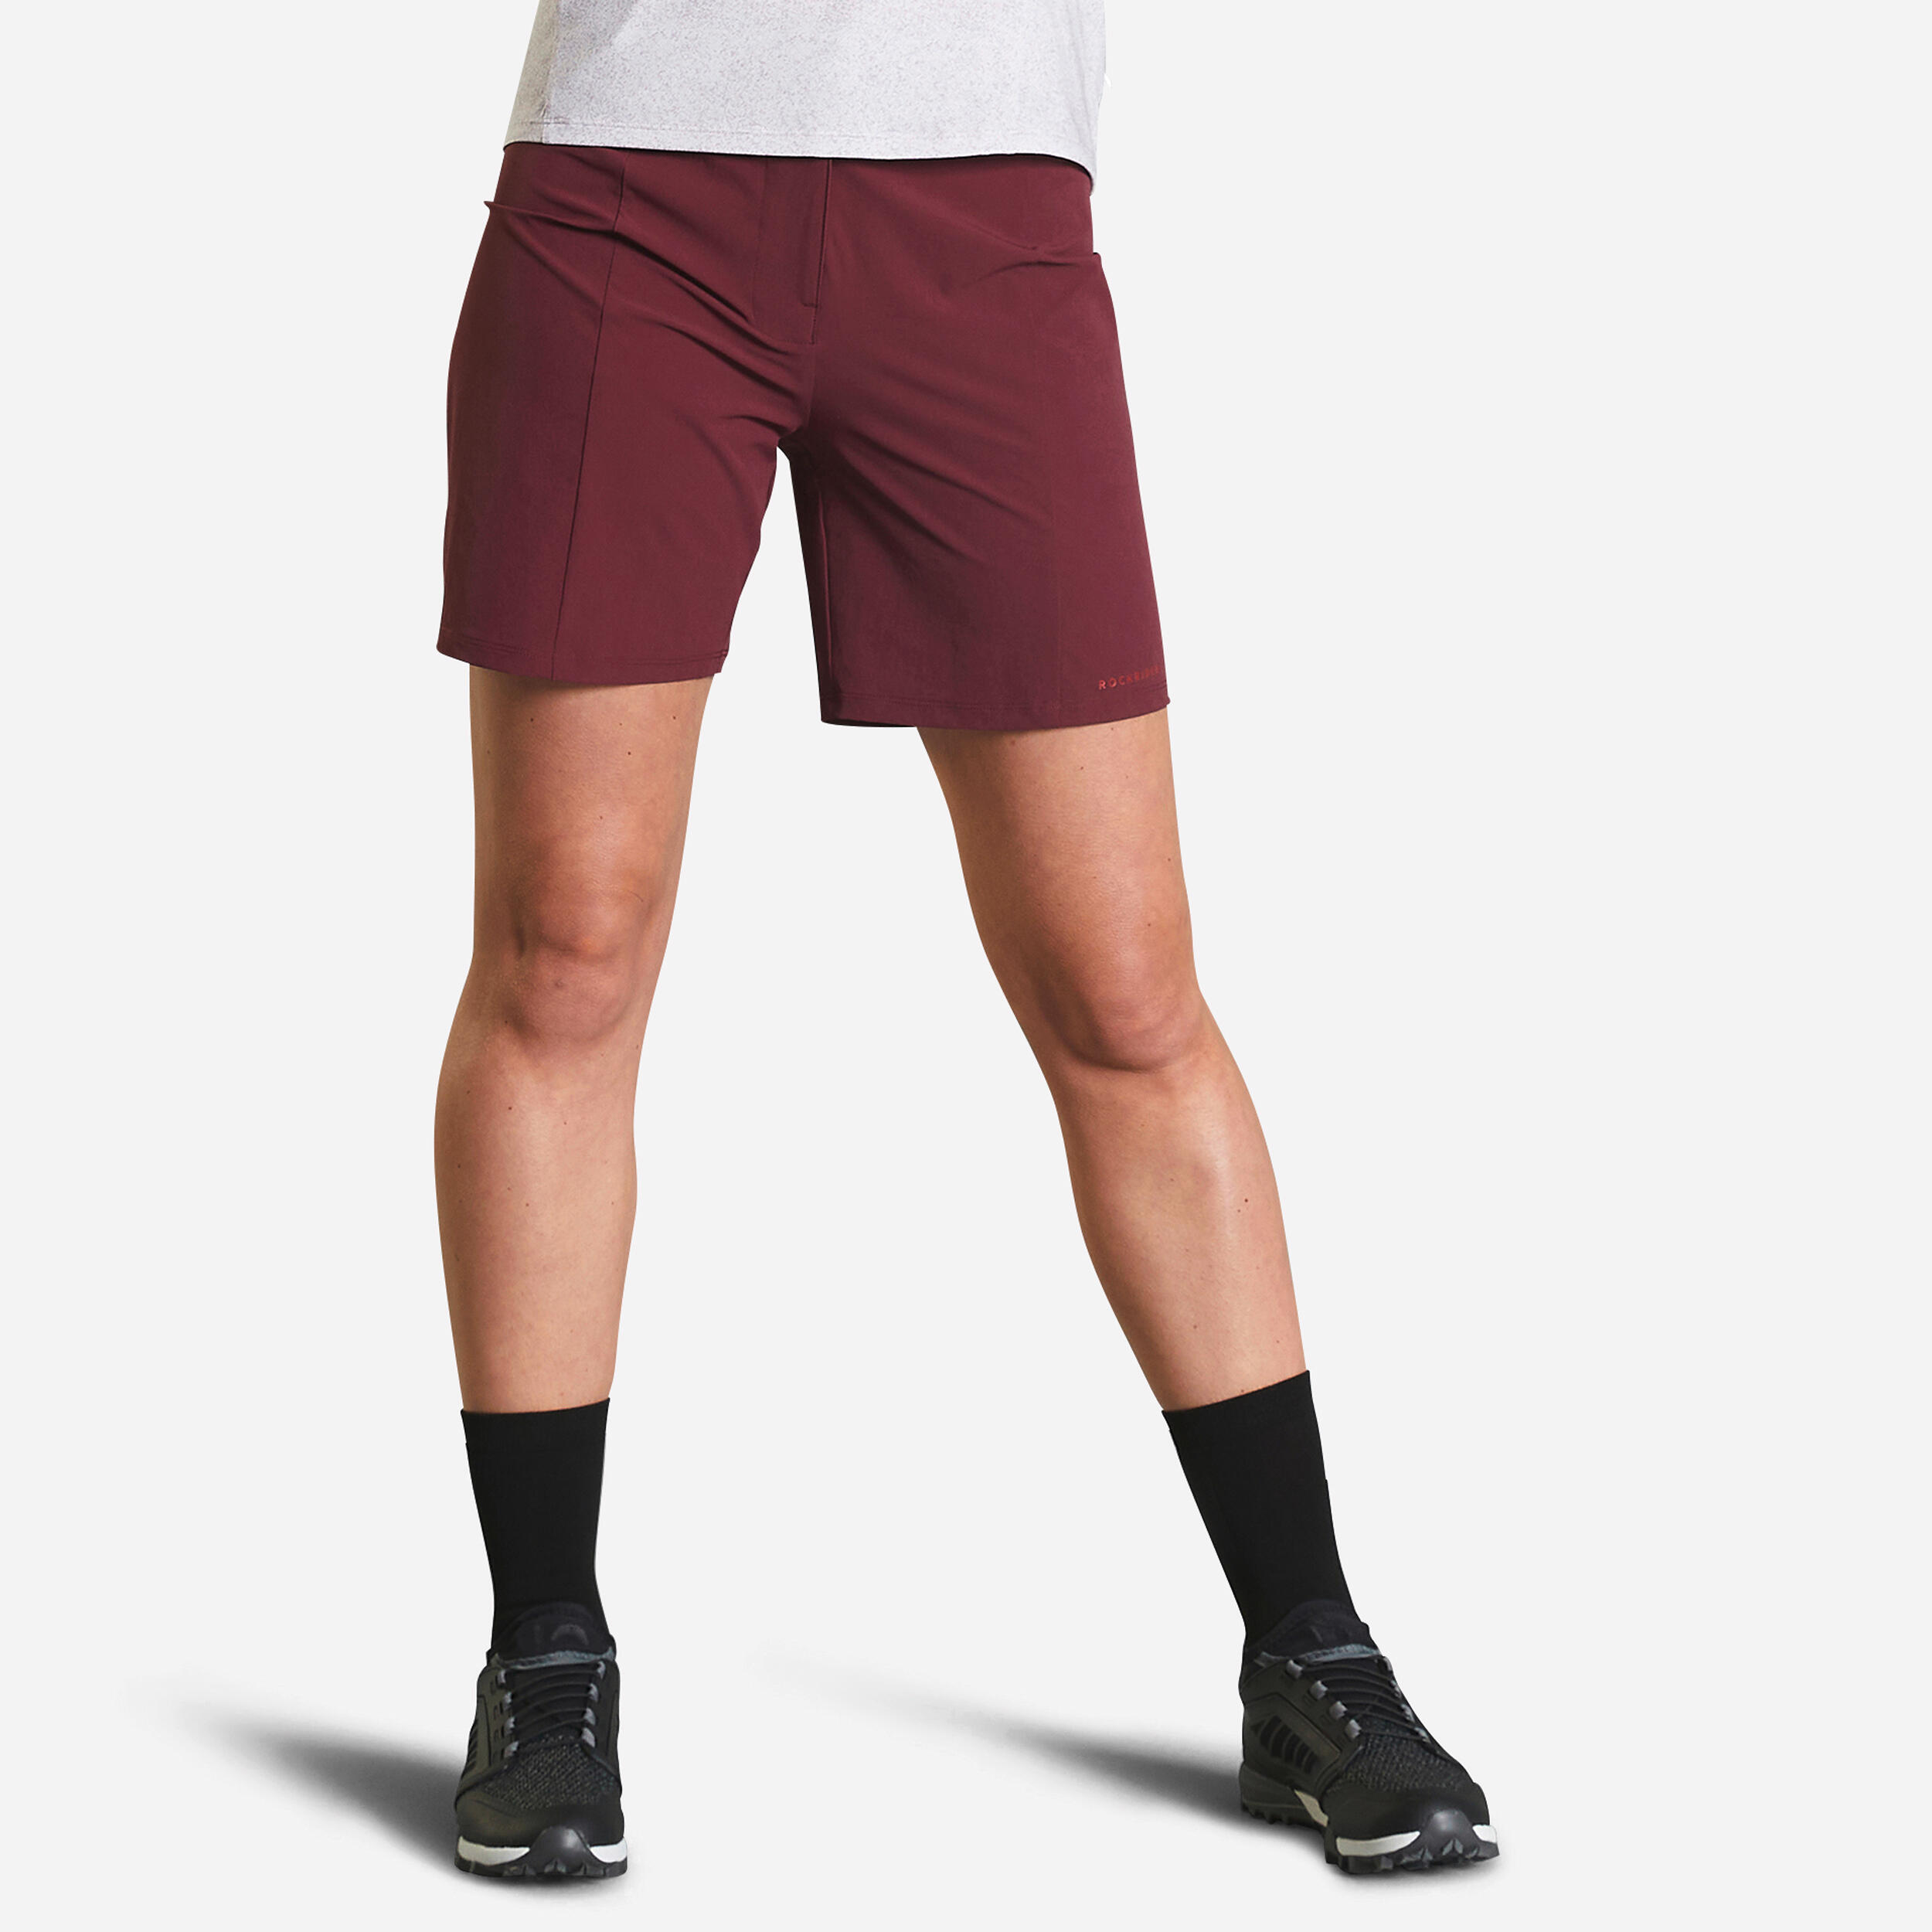 ROCKRIDER Women's Mountain Biking Shorts Expl 500 - Burgundy